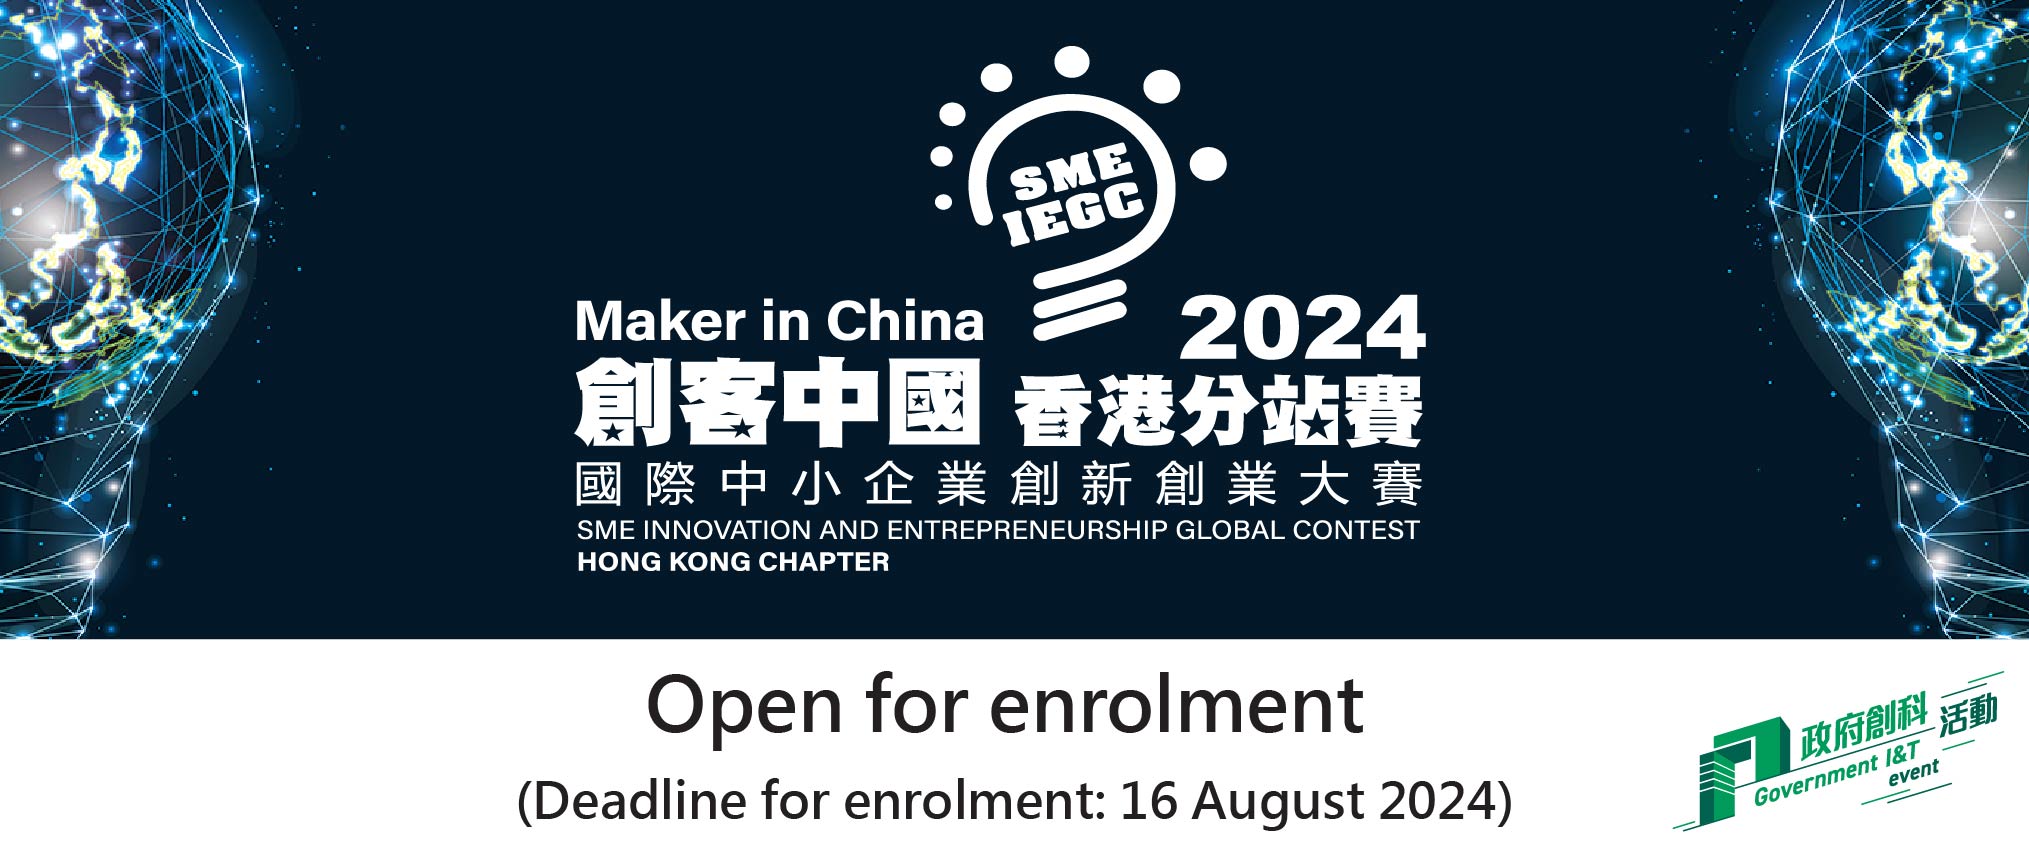 2024 “Maker in China” SME Innovation and Entrepreneurship Global Contest - Hong Kong Chapter